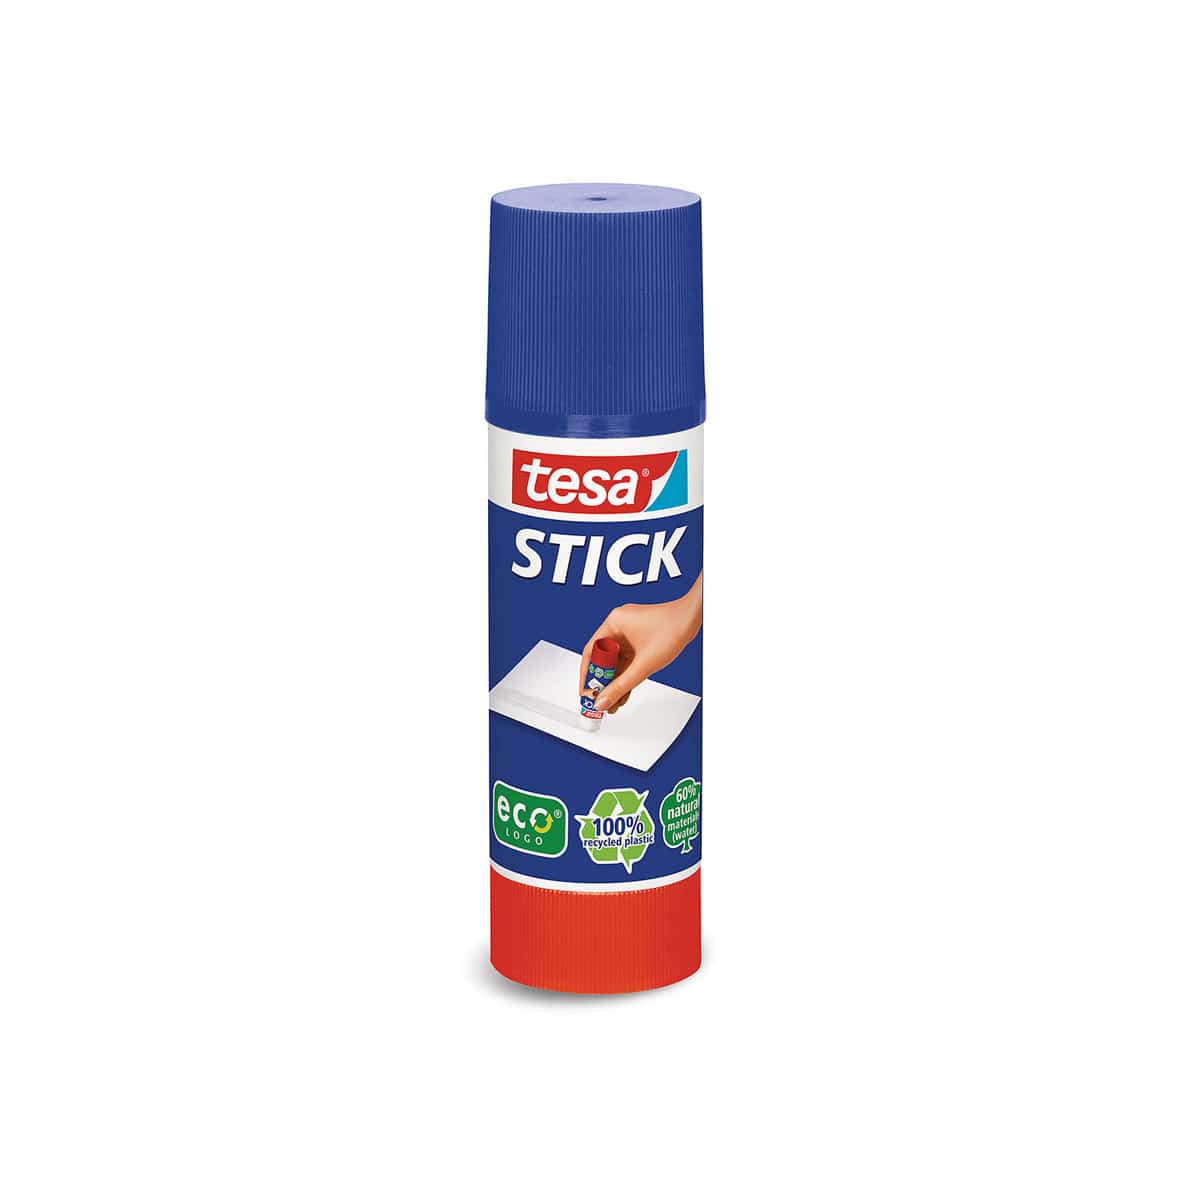 Tesa® ecoLogo glue stick